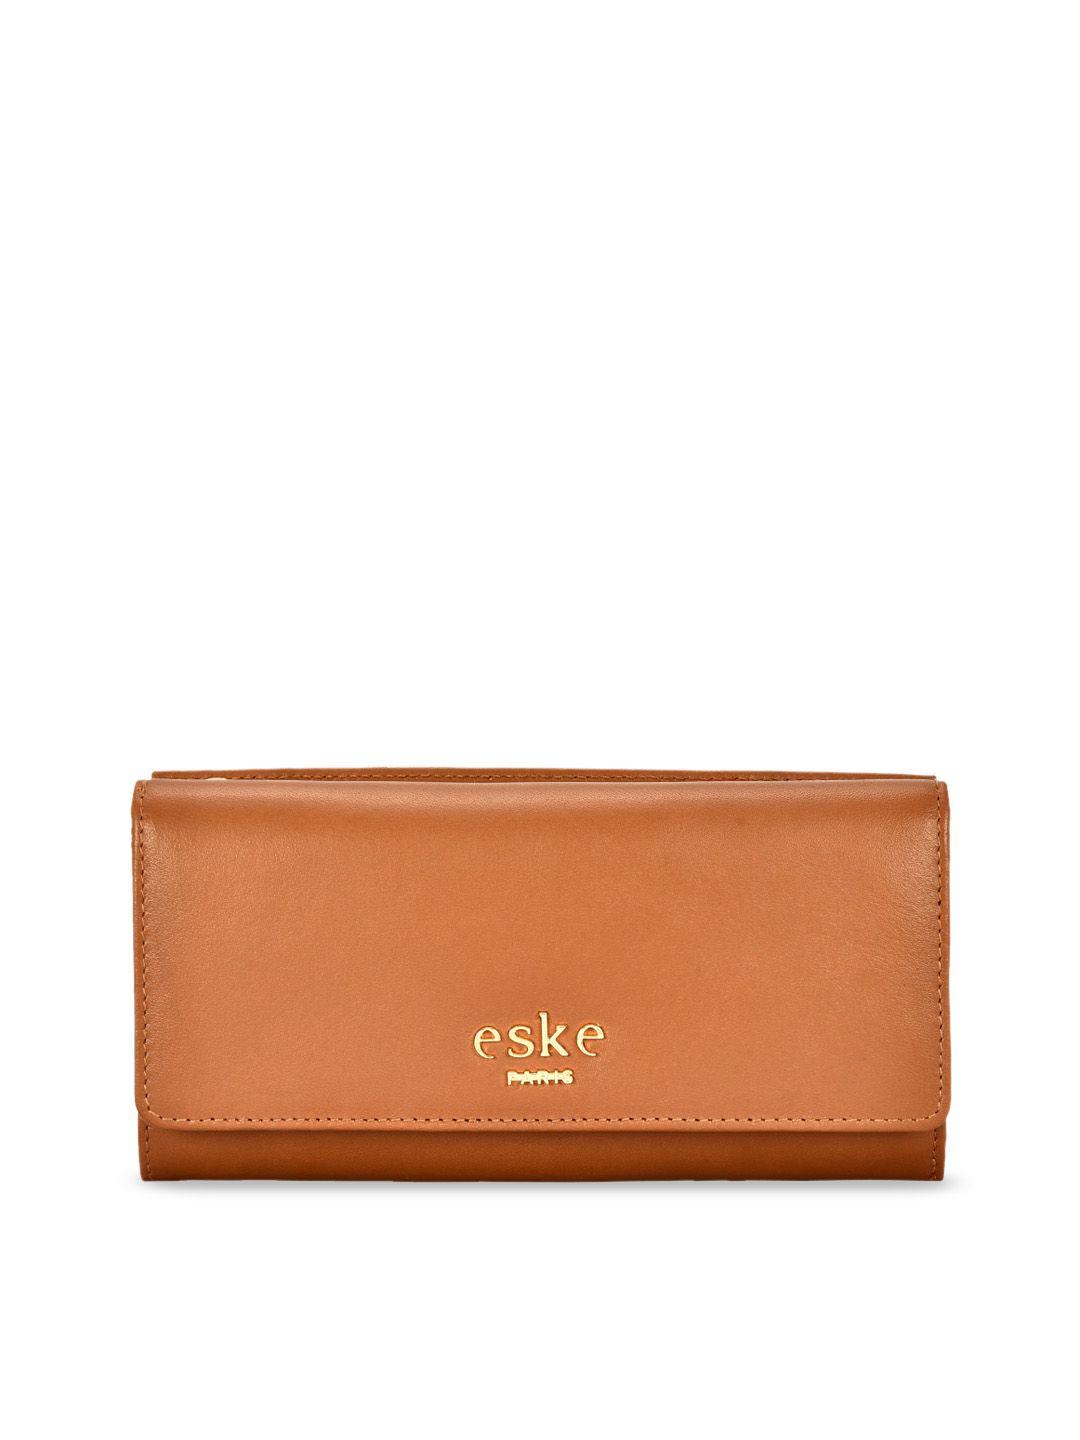 eske women tan brown solid leather three fold wallet